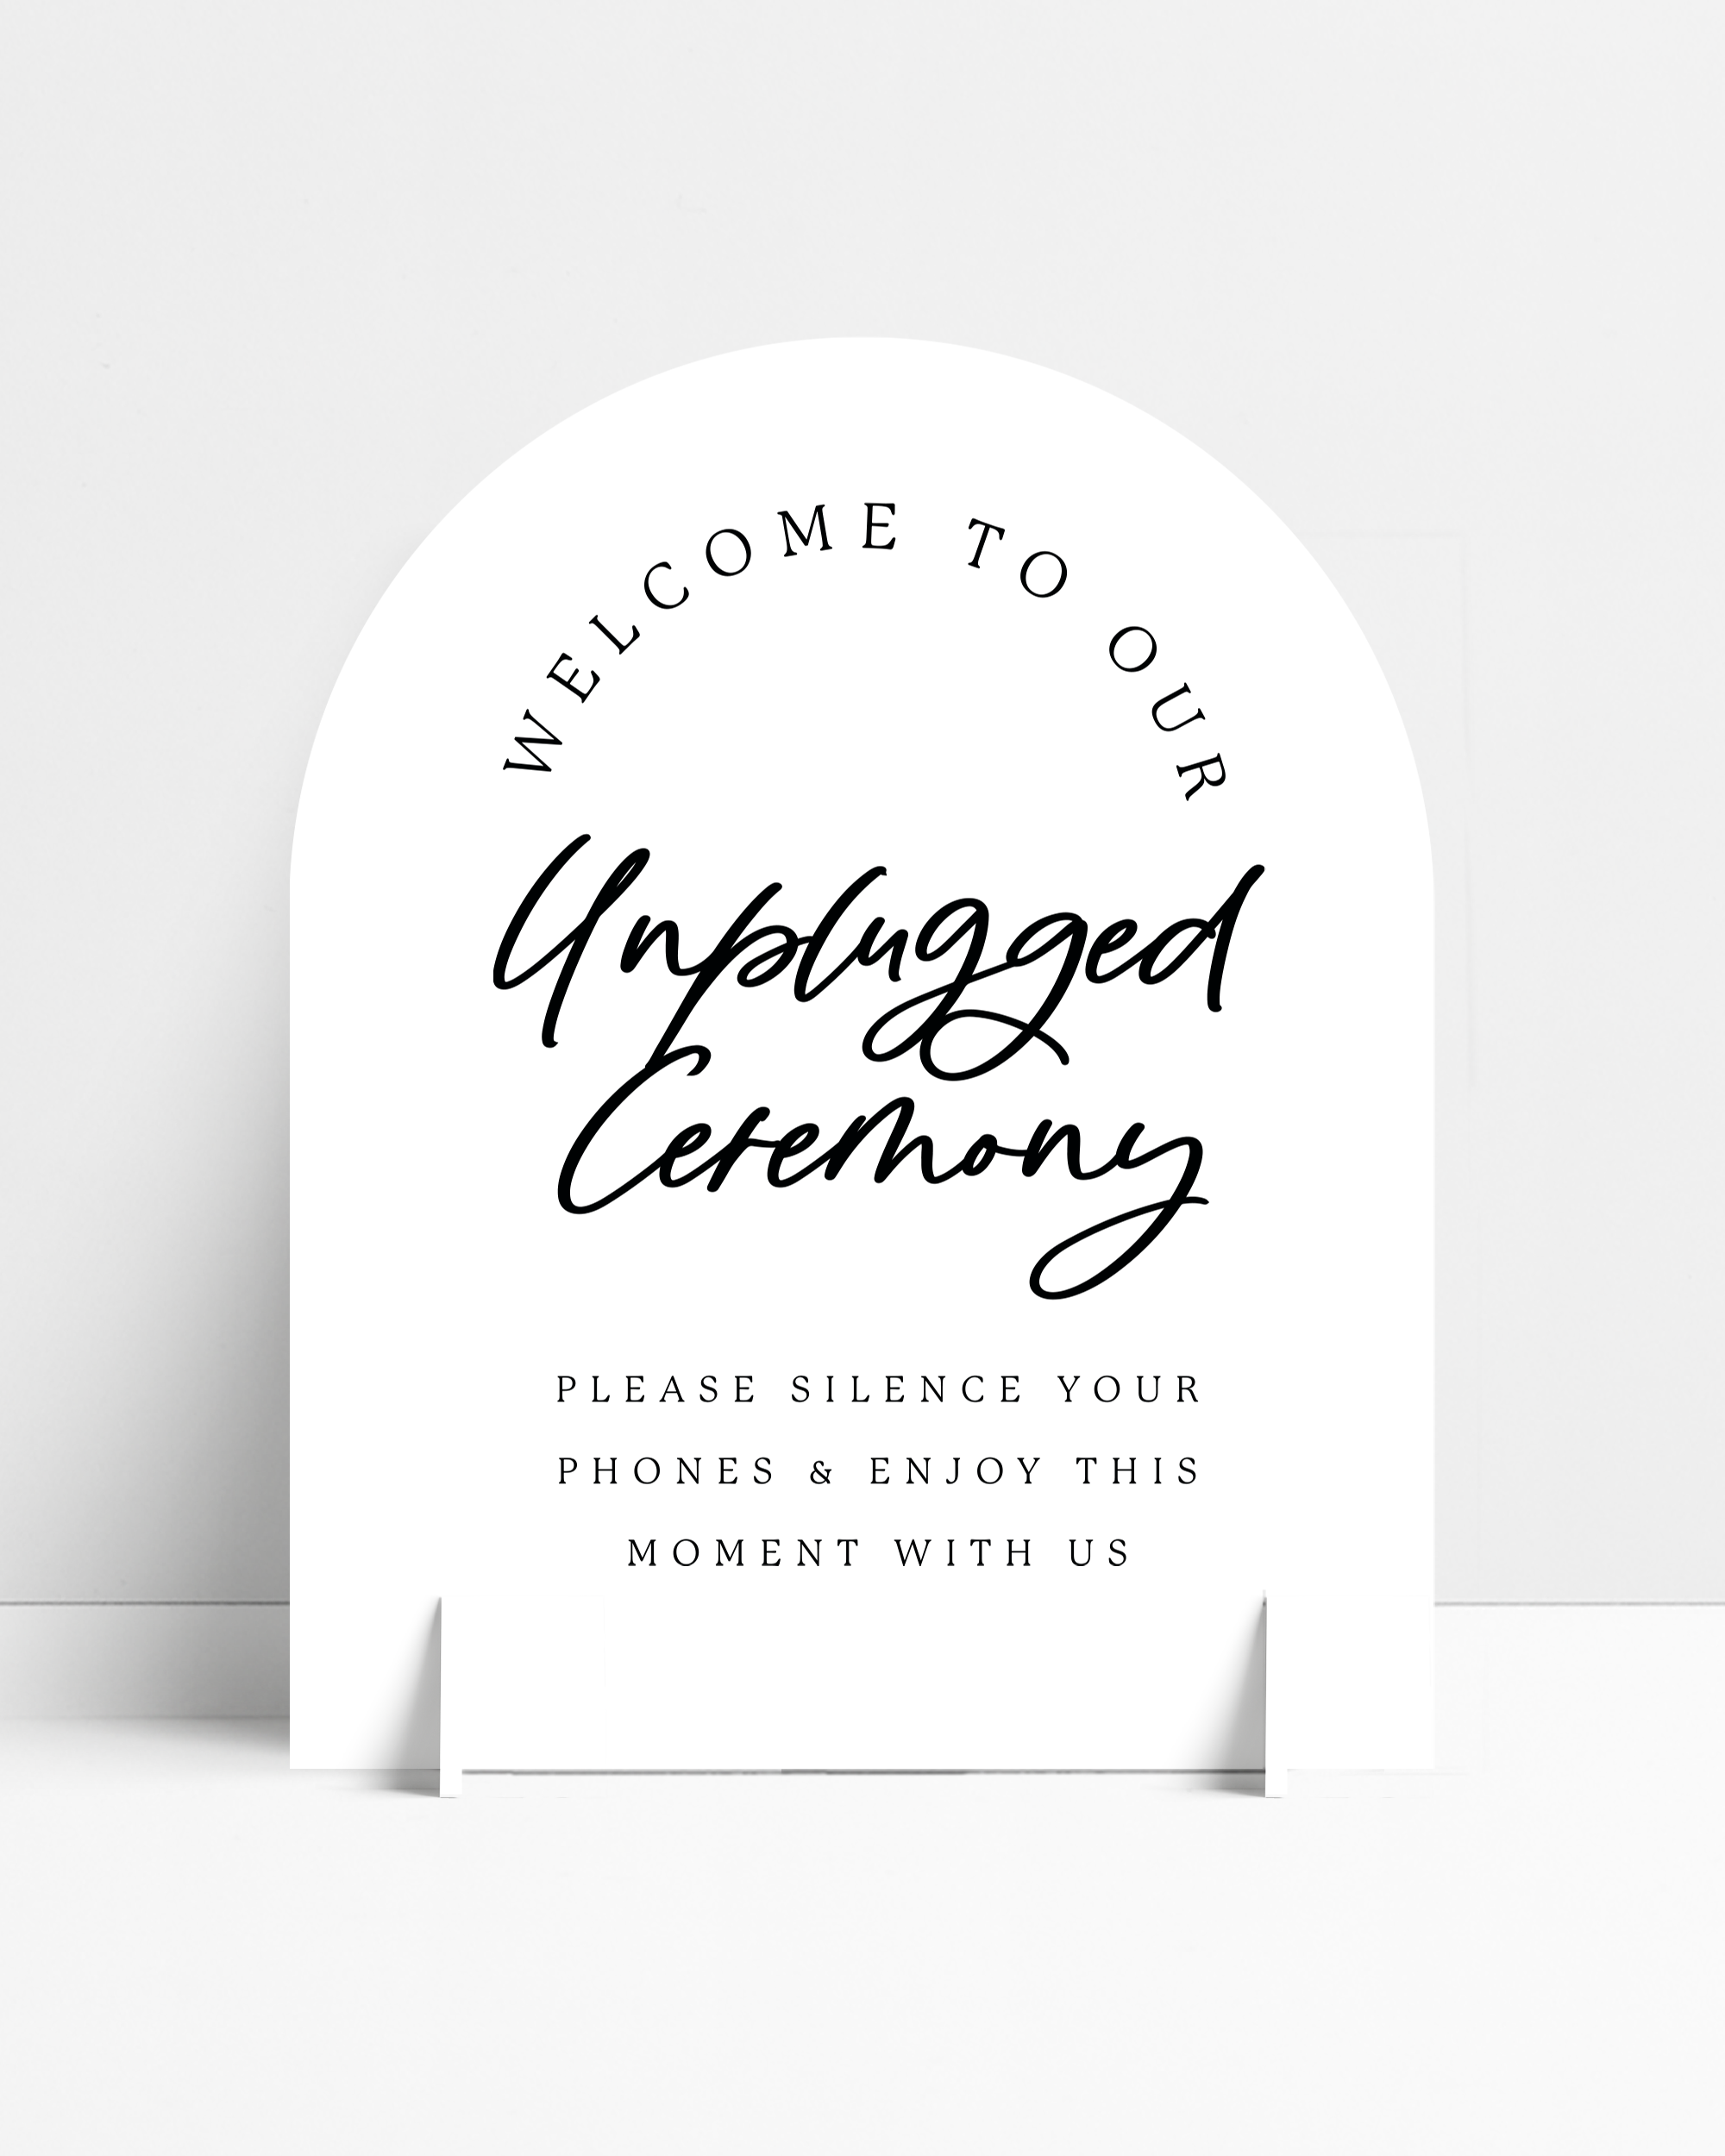 Unplugged Ceremony Wedding Sign • Marigold